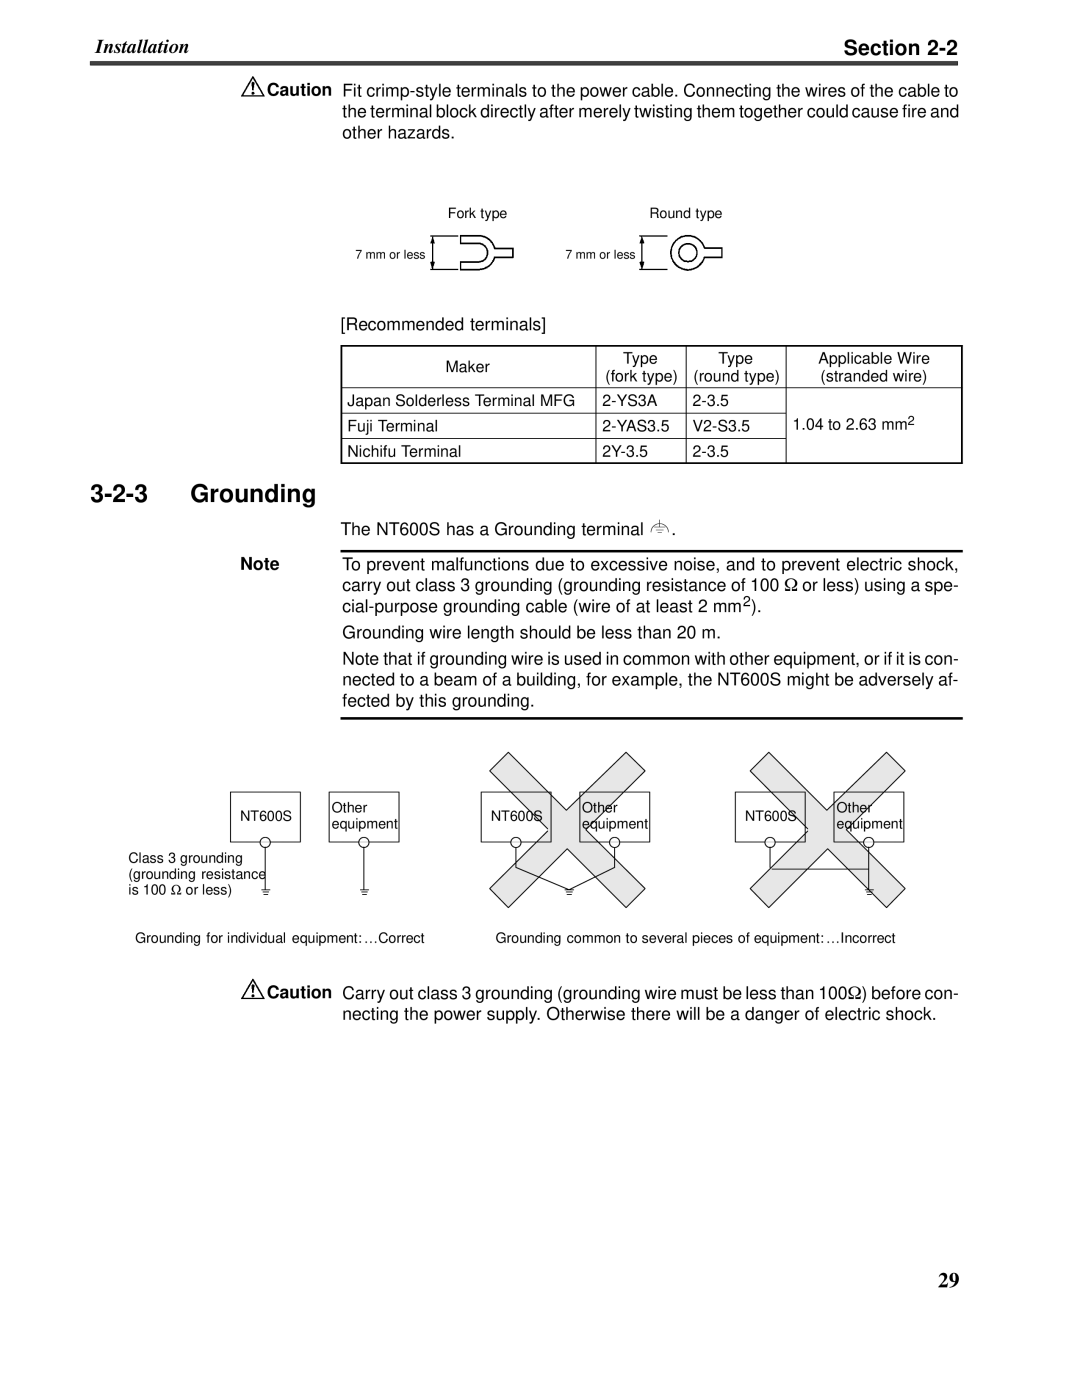 Omron V022-E3-1 operation manual 3-2-3Grounding, Section 